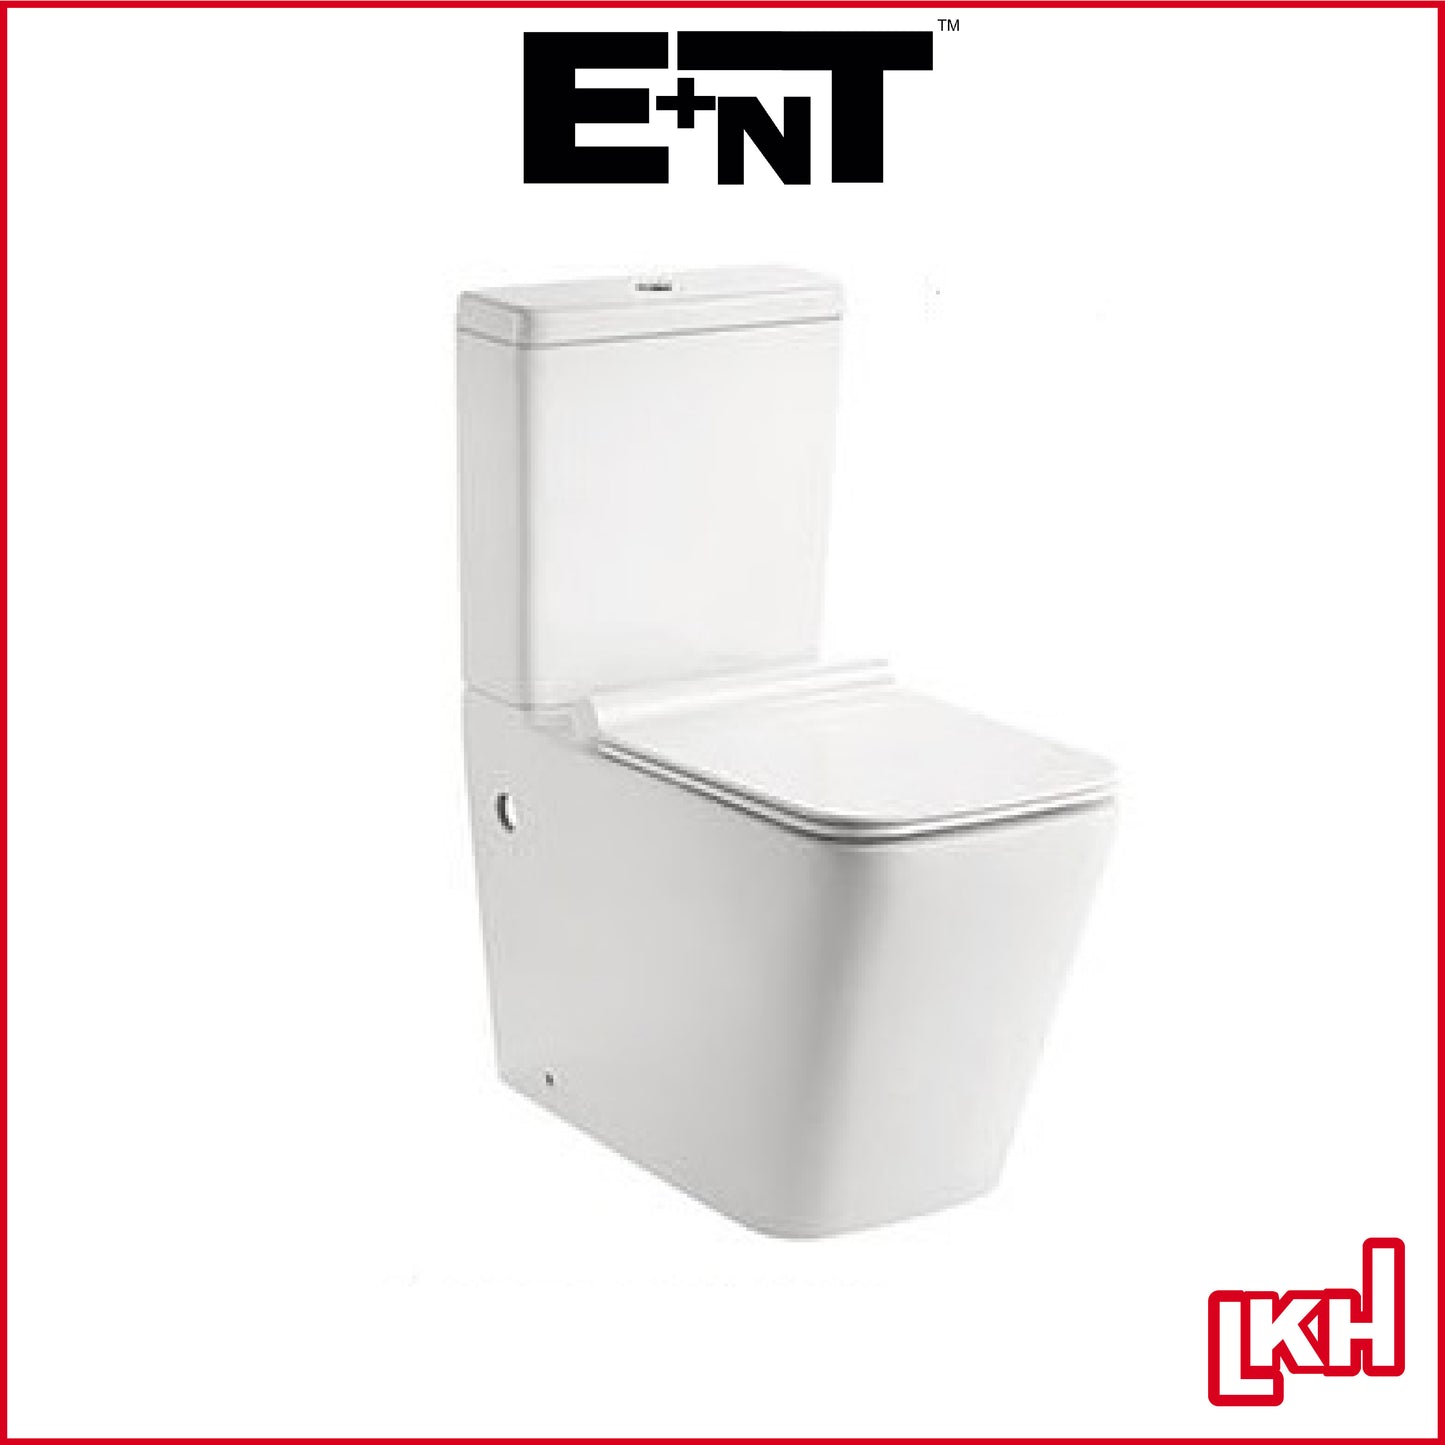 E+NT Thames Two-Piece Washdown Water Closet/Toilet Bowl